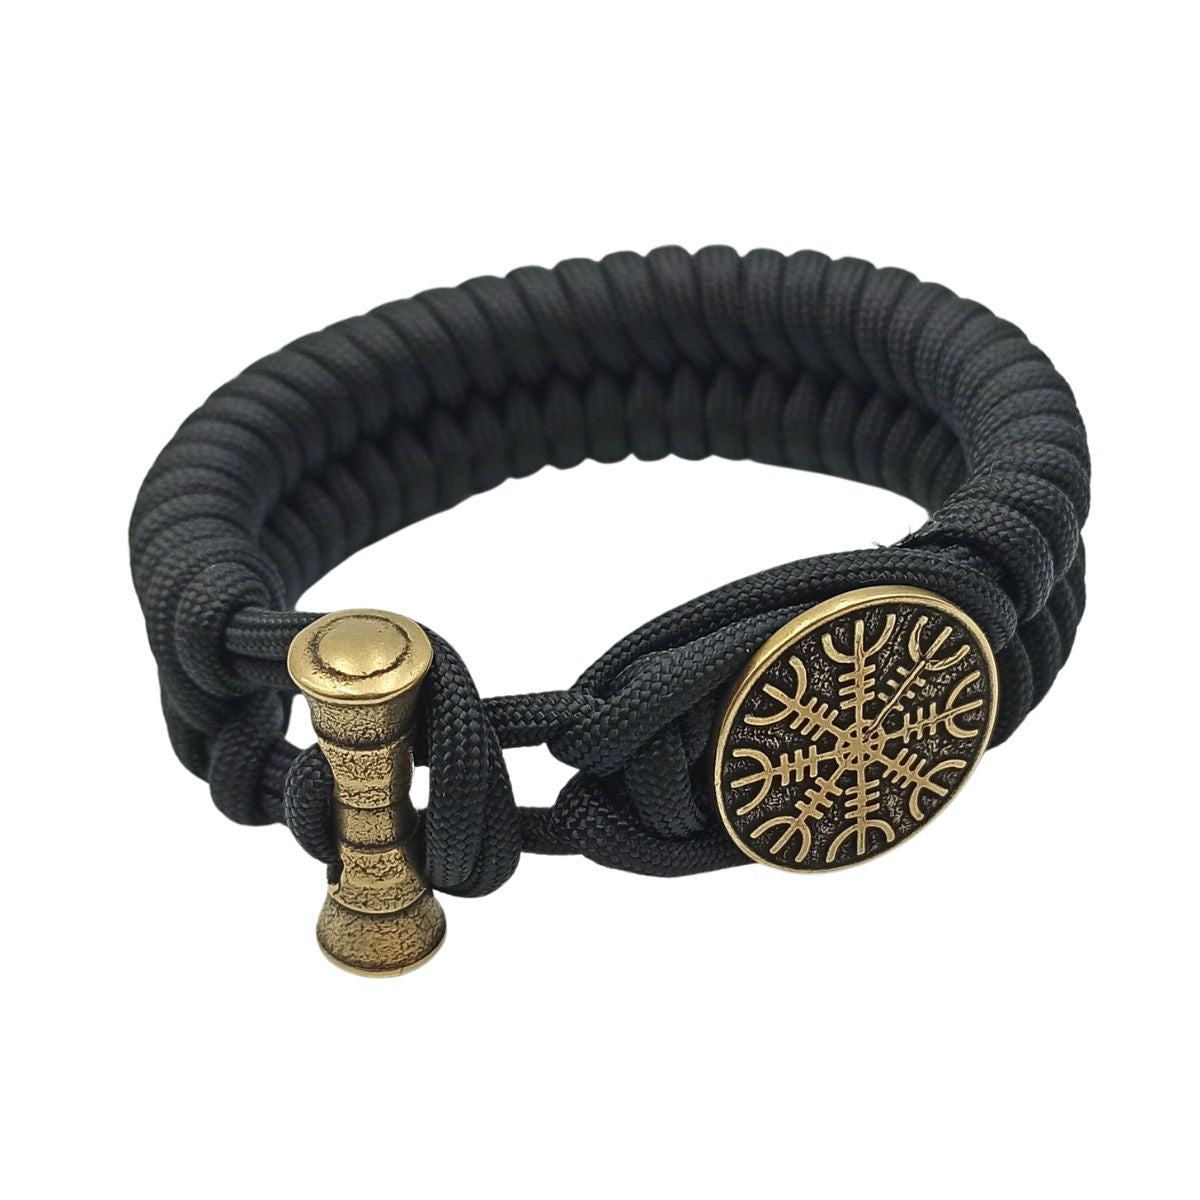 Helm of Awe paracord bracelet